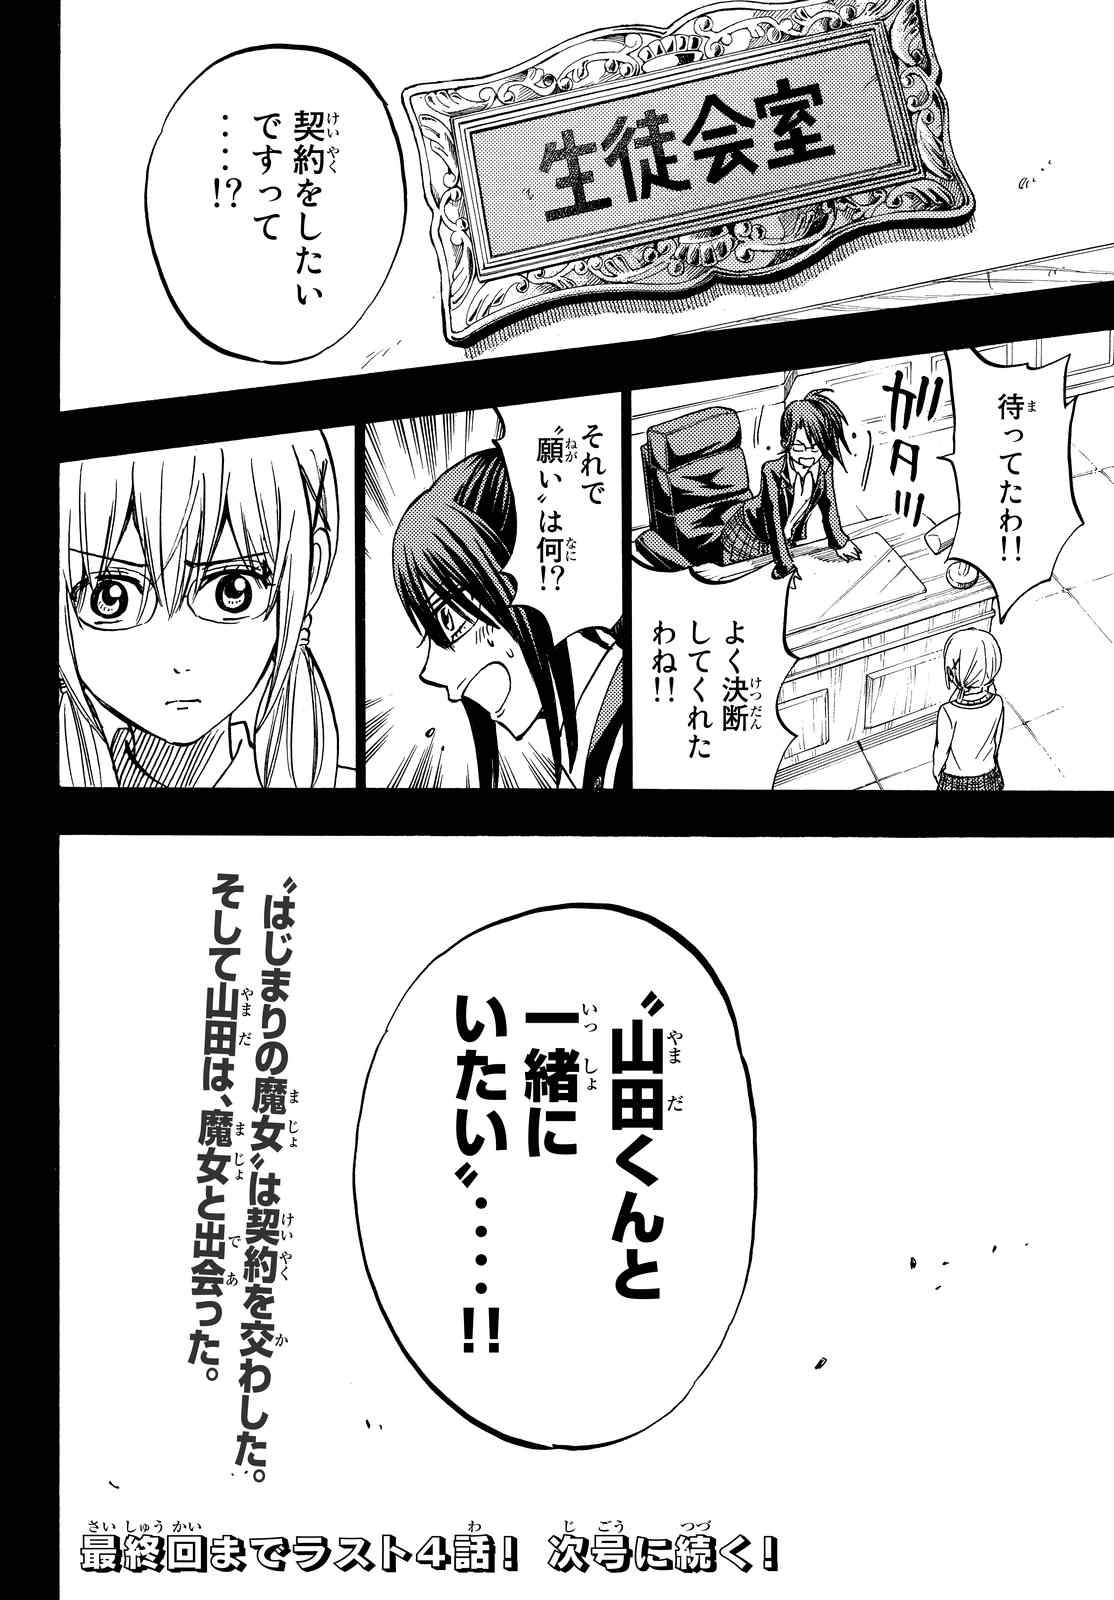 Yamada-kun to 7-nin no Majo - Chapter 239 - Page 27